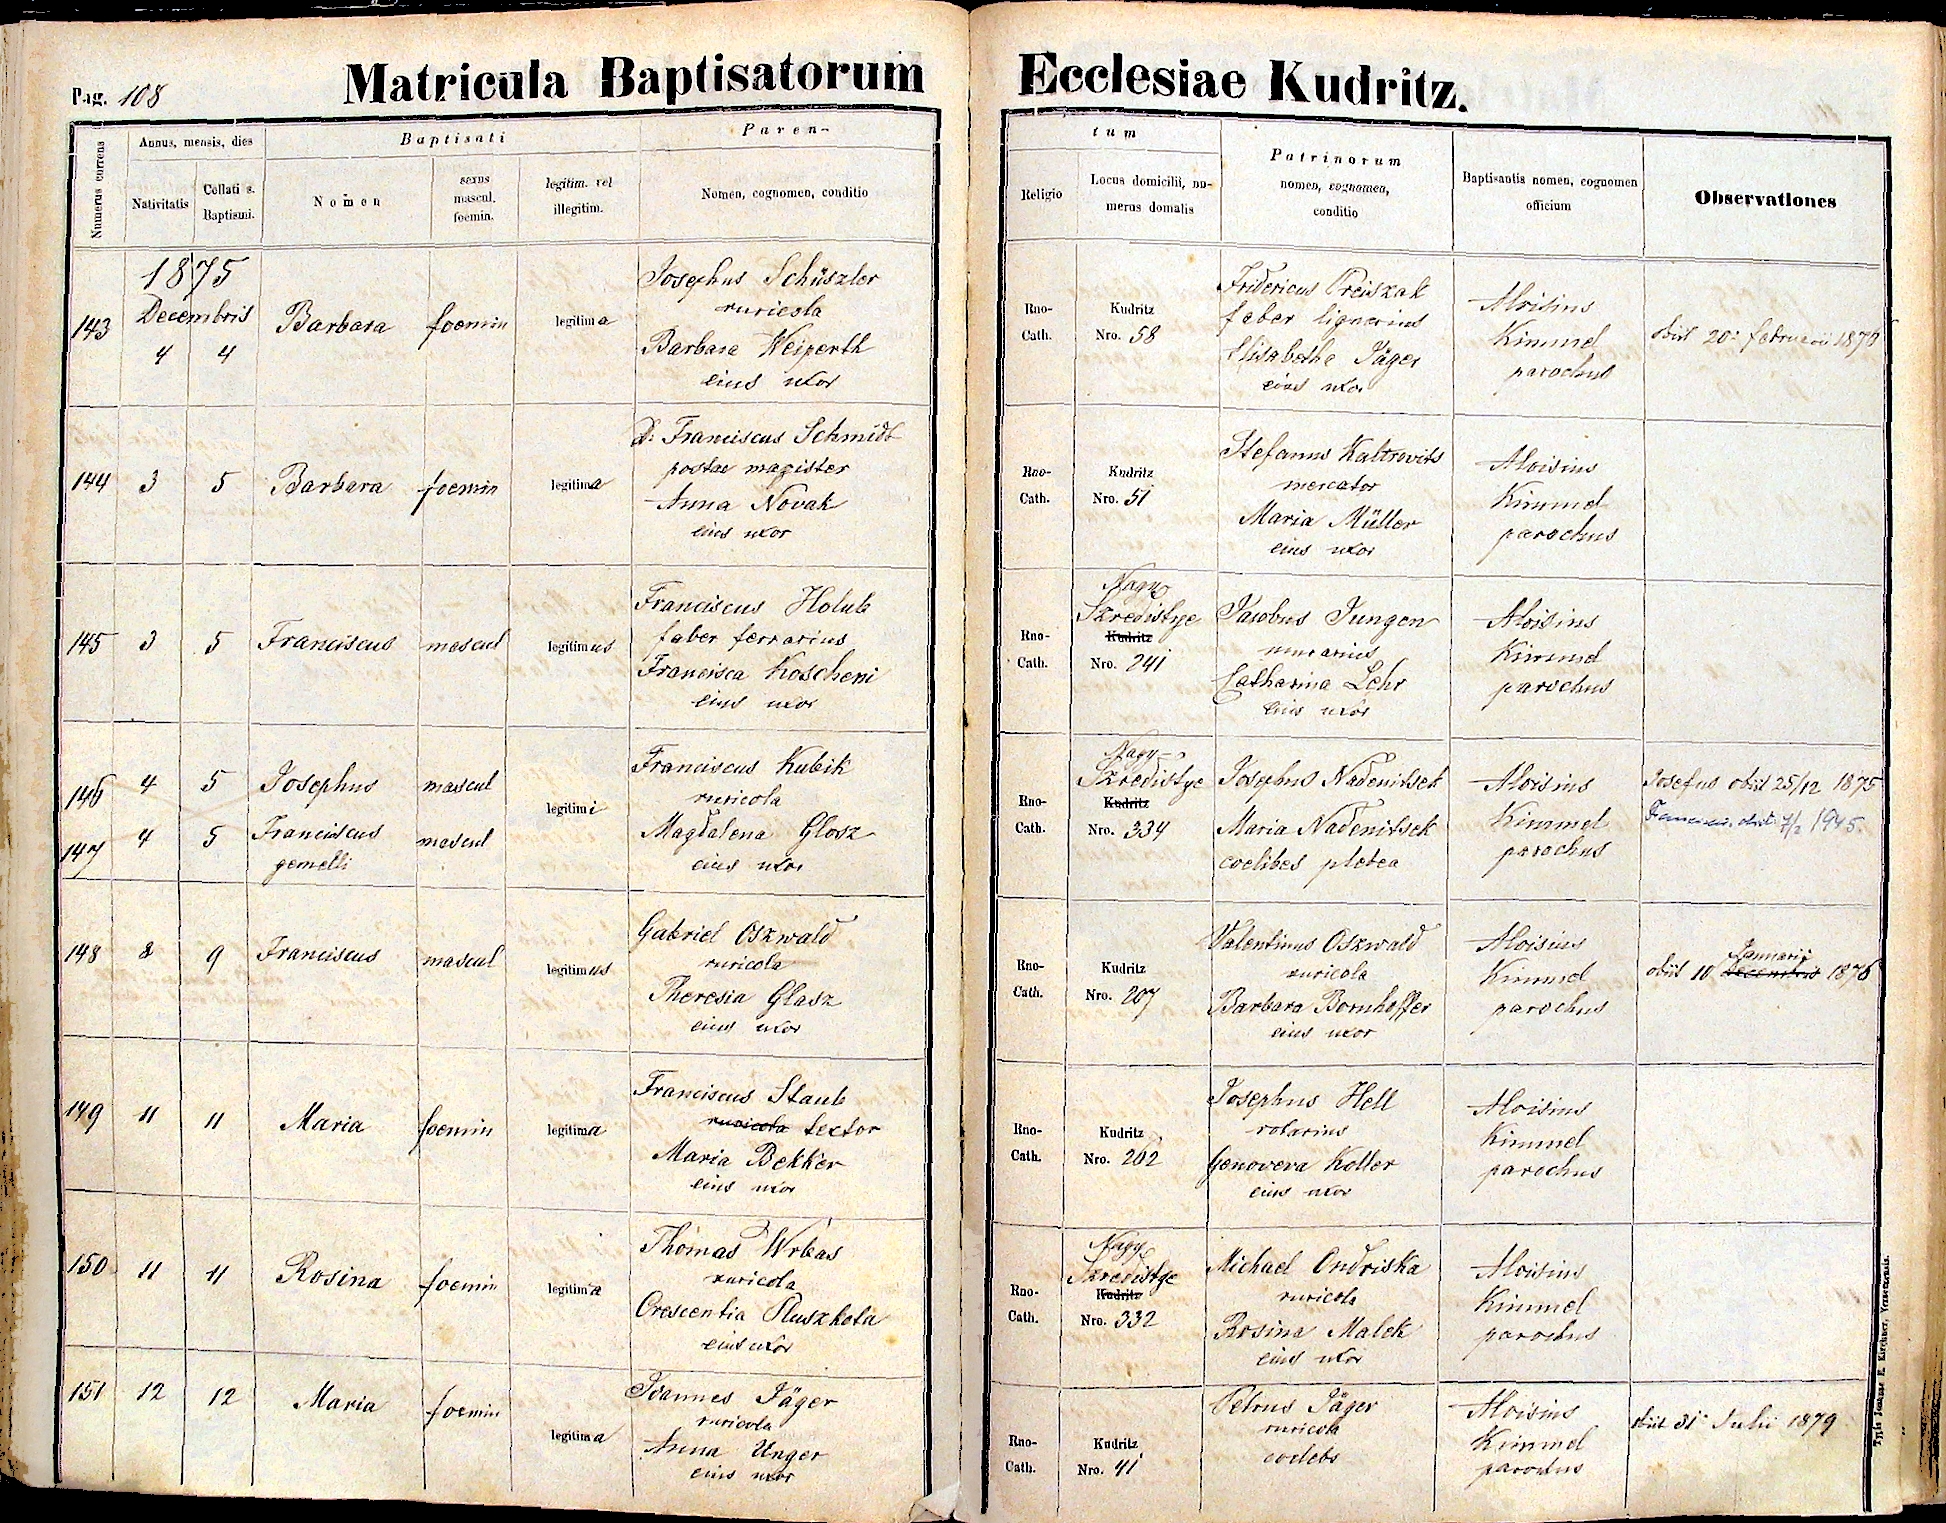 images/church_records/BIRTHS/1884-1899B/1891/108